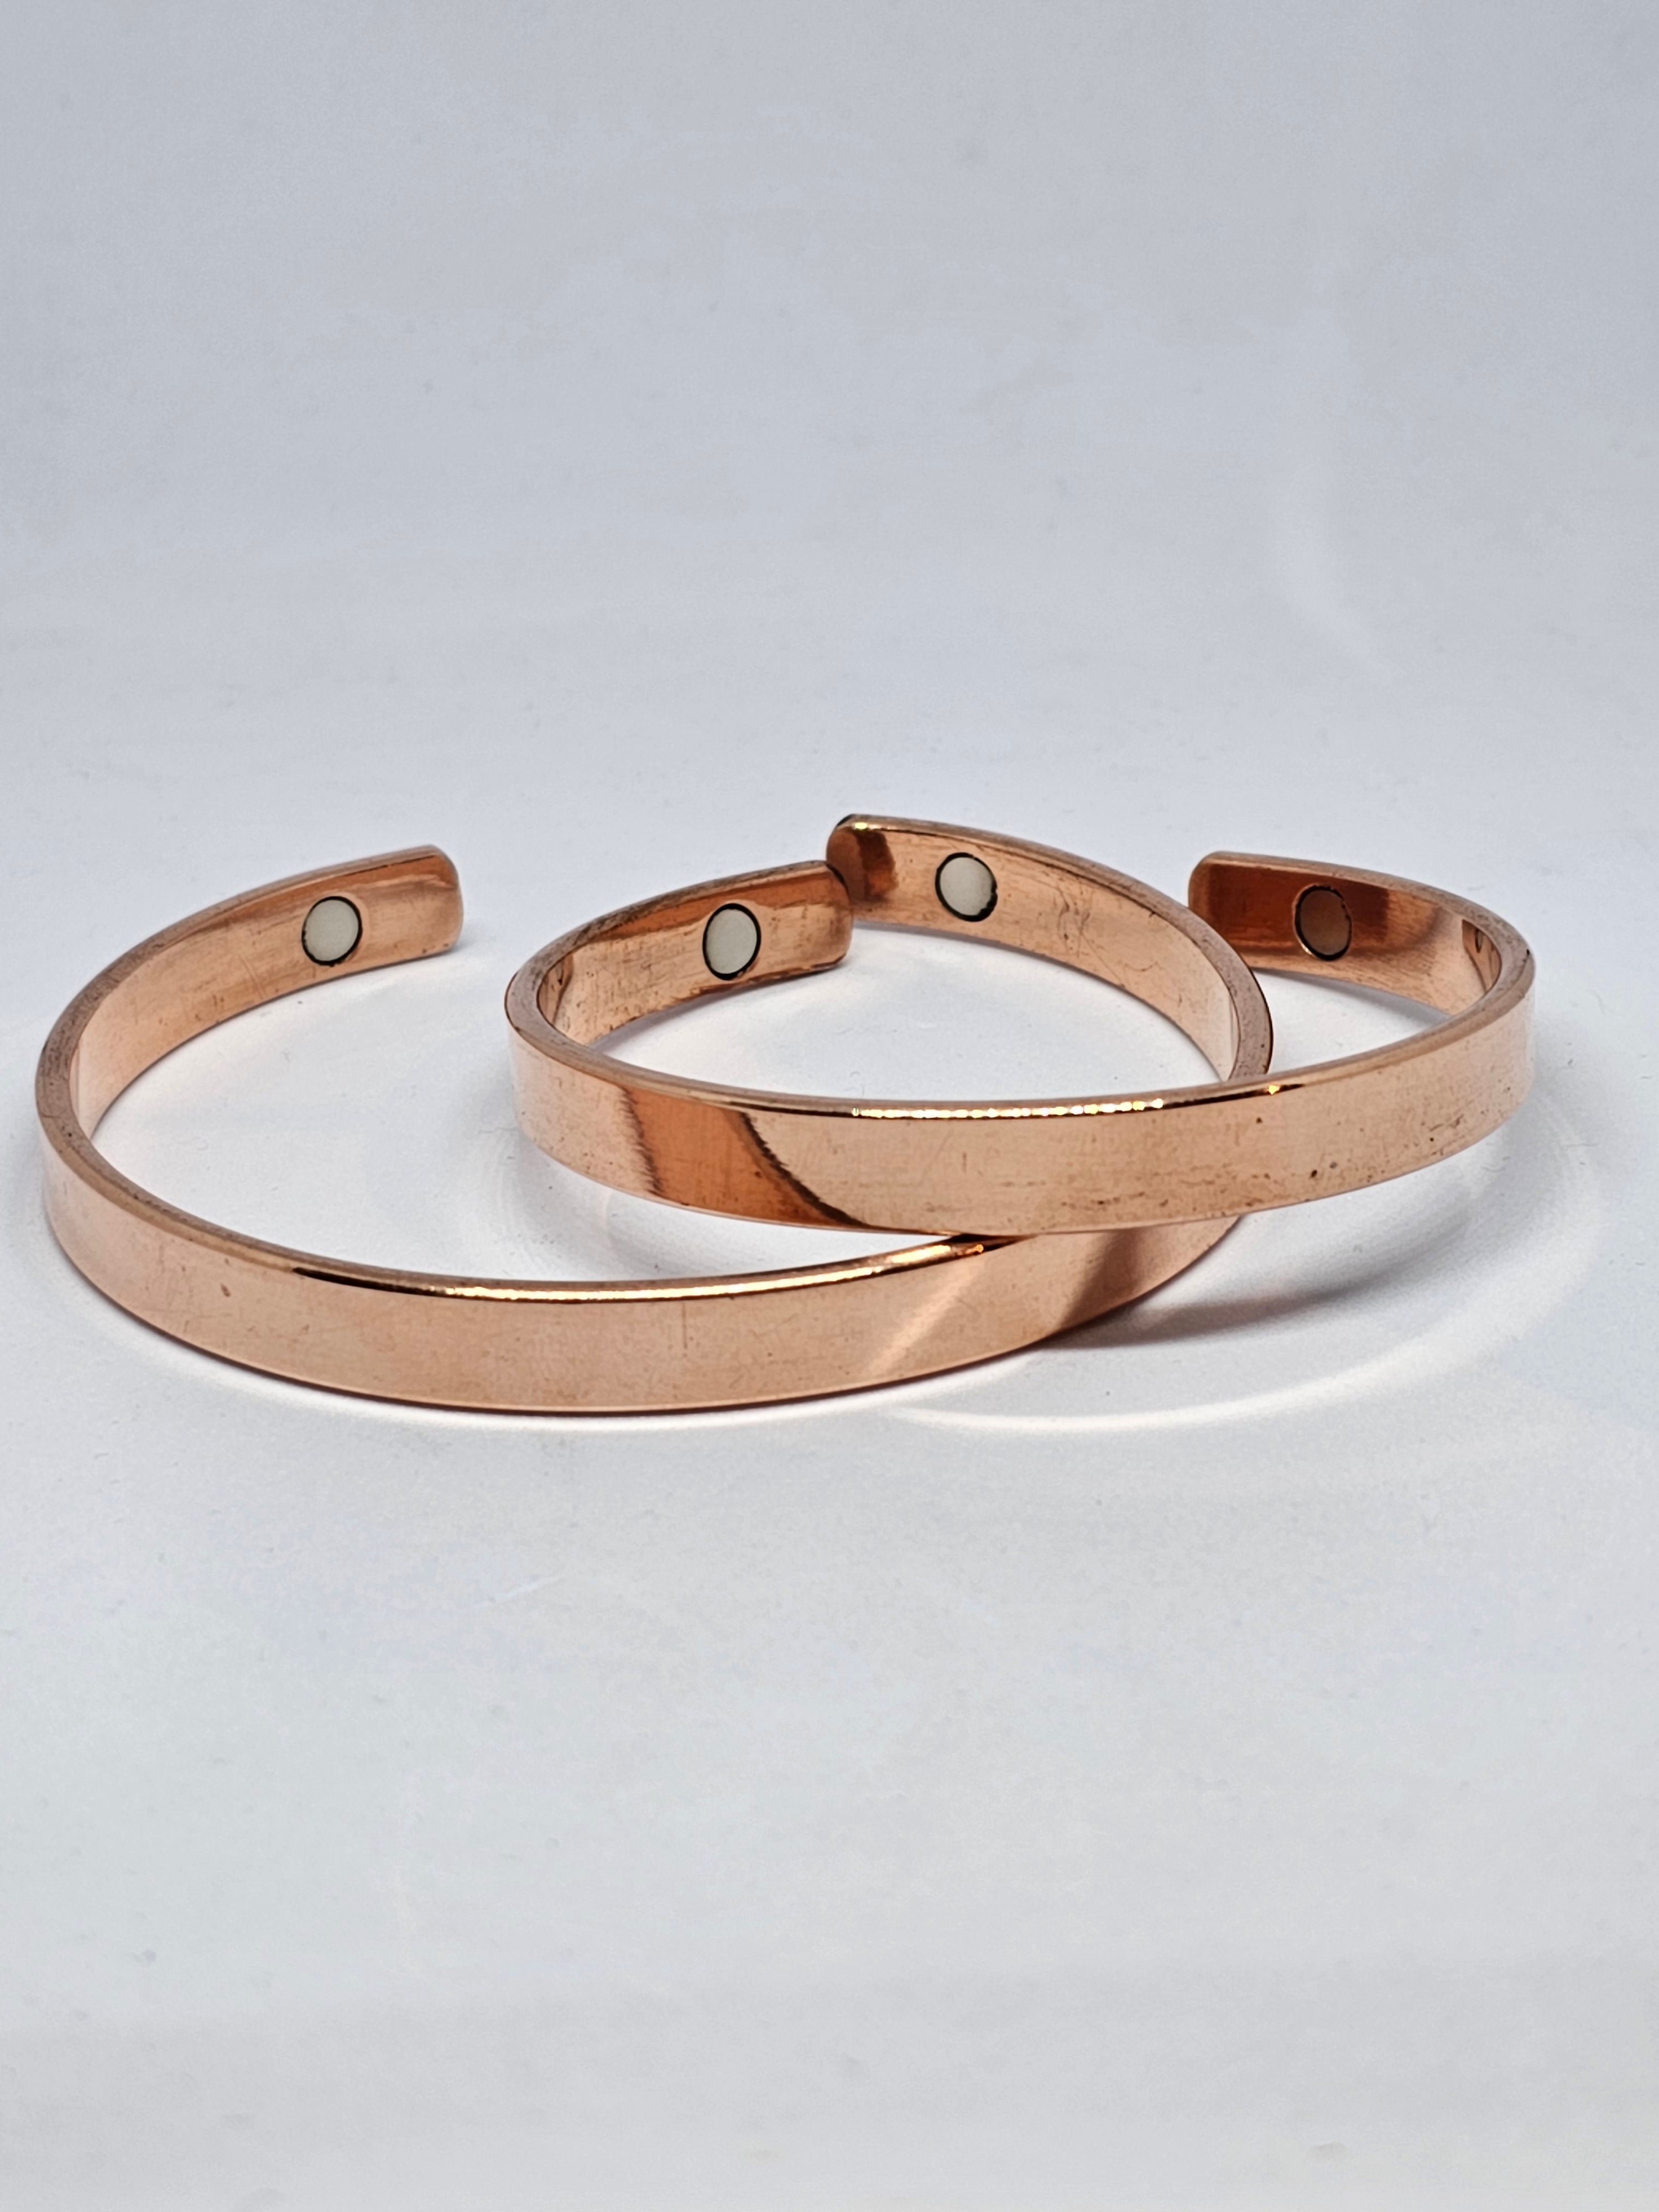 Handmade Pure Copper Magnetic Bracelet - Rivendell Shop